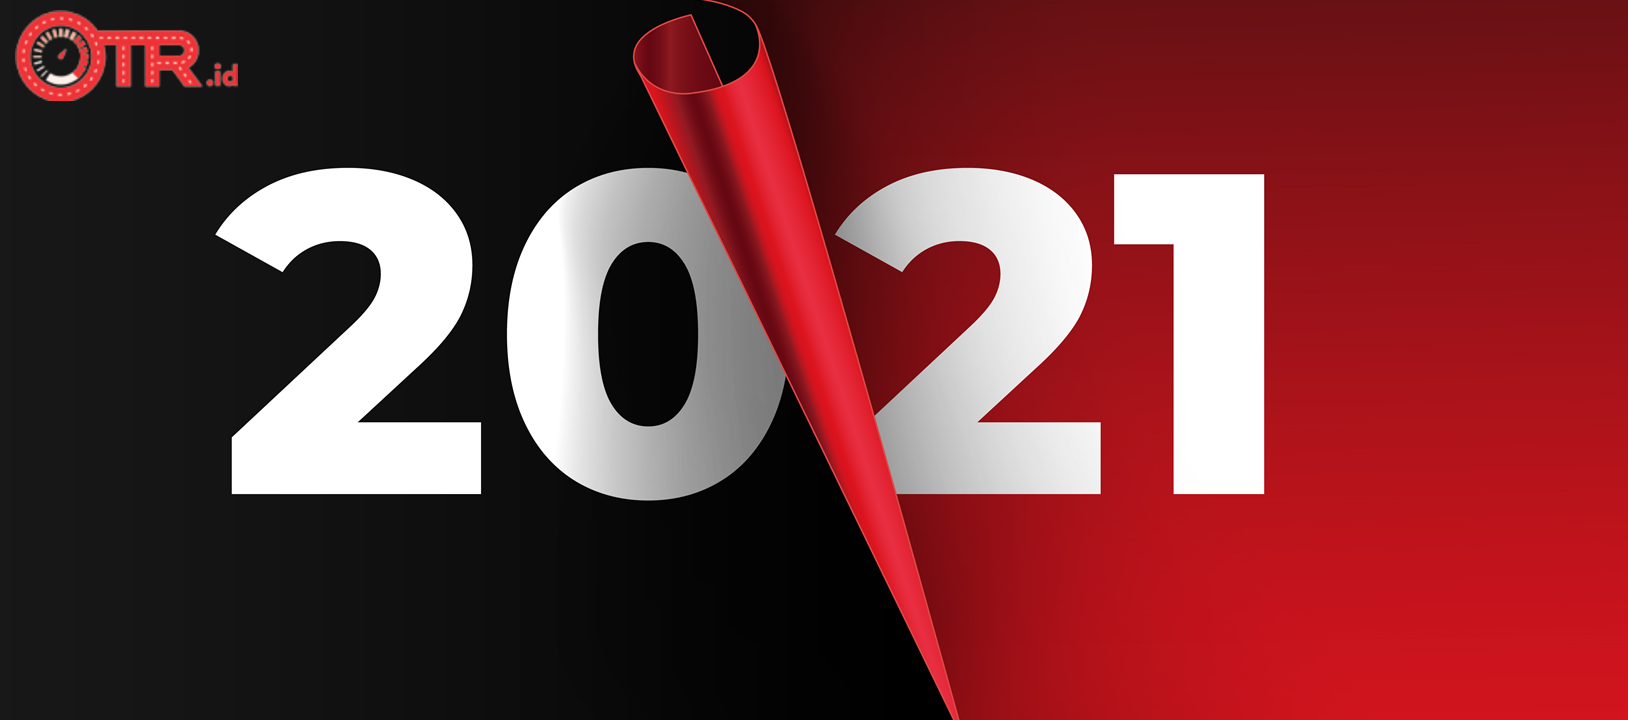 Featured image of post Kalender 2021 Tanggal Merah 2021 - Template kalender 2021 file cdr corel draw lengkap hijriyah, jawa dan libur nasional.